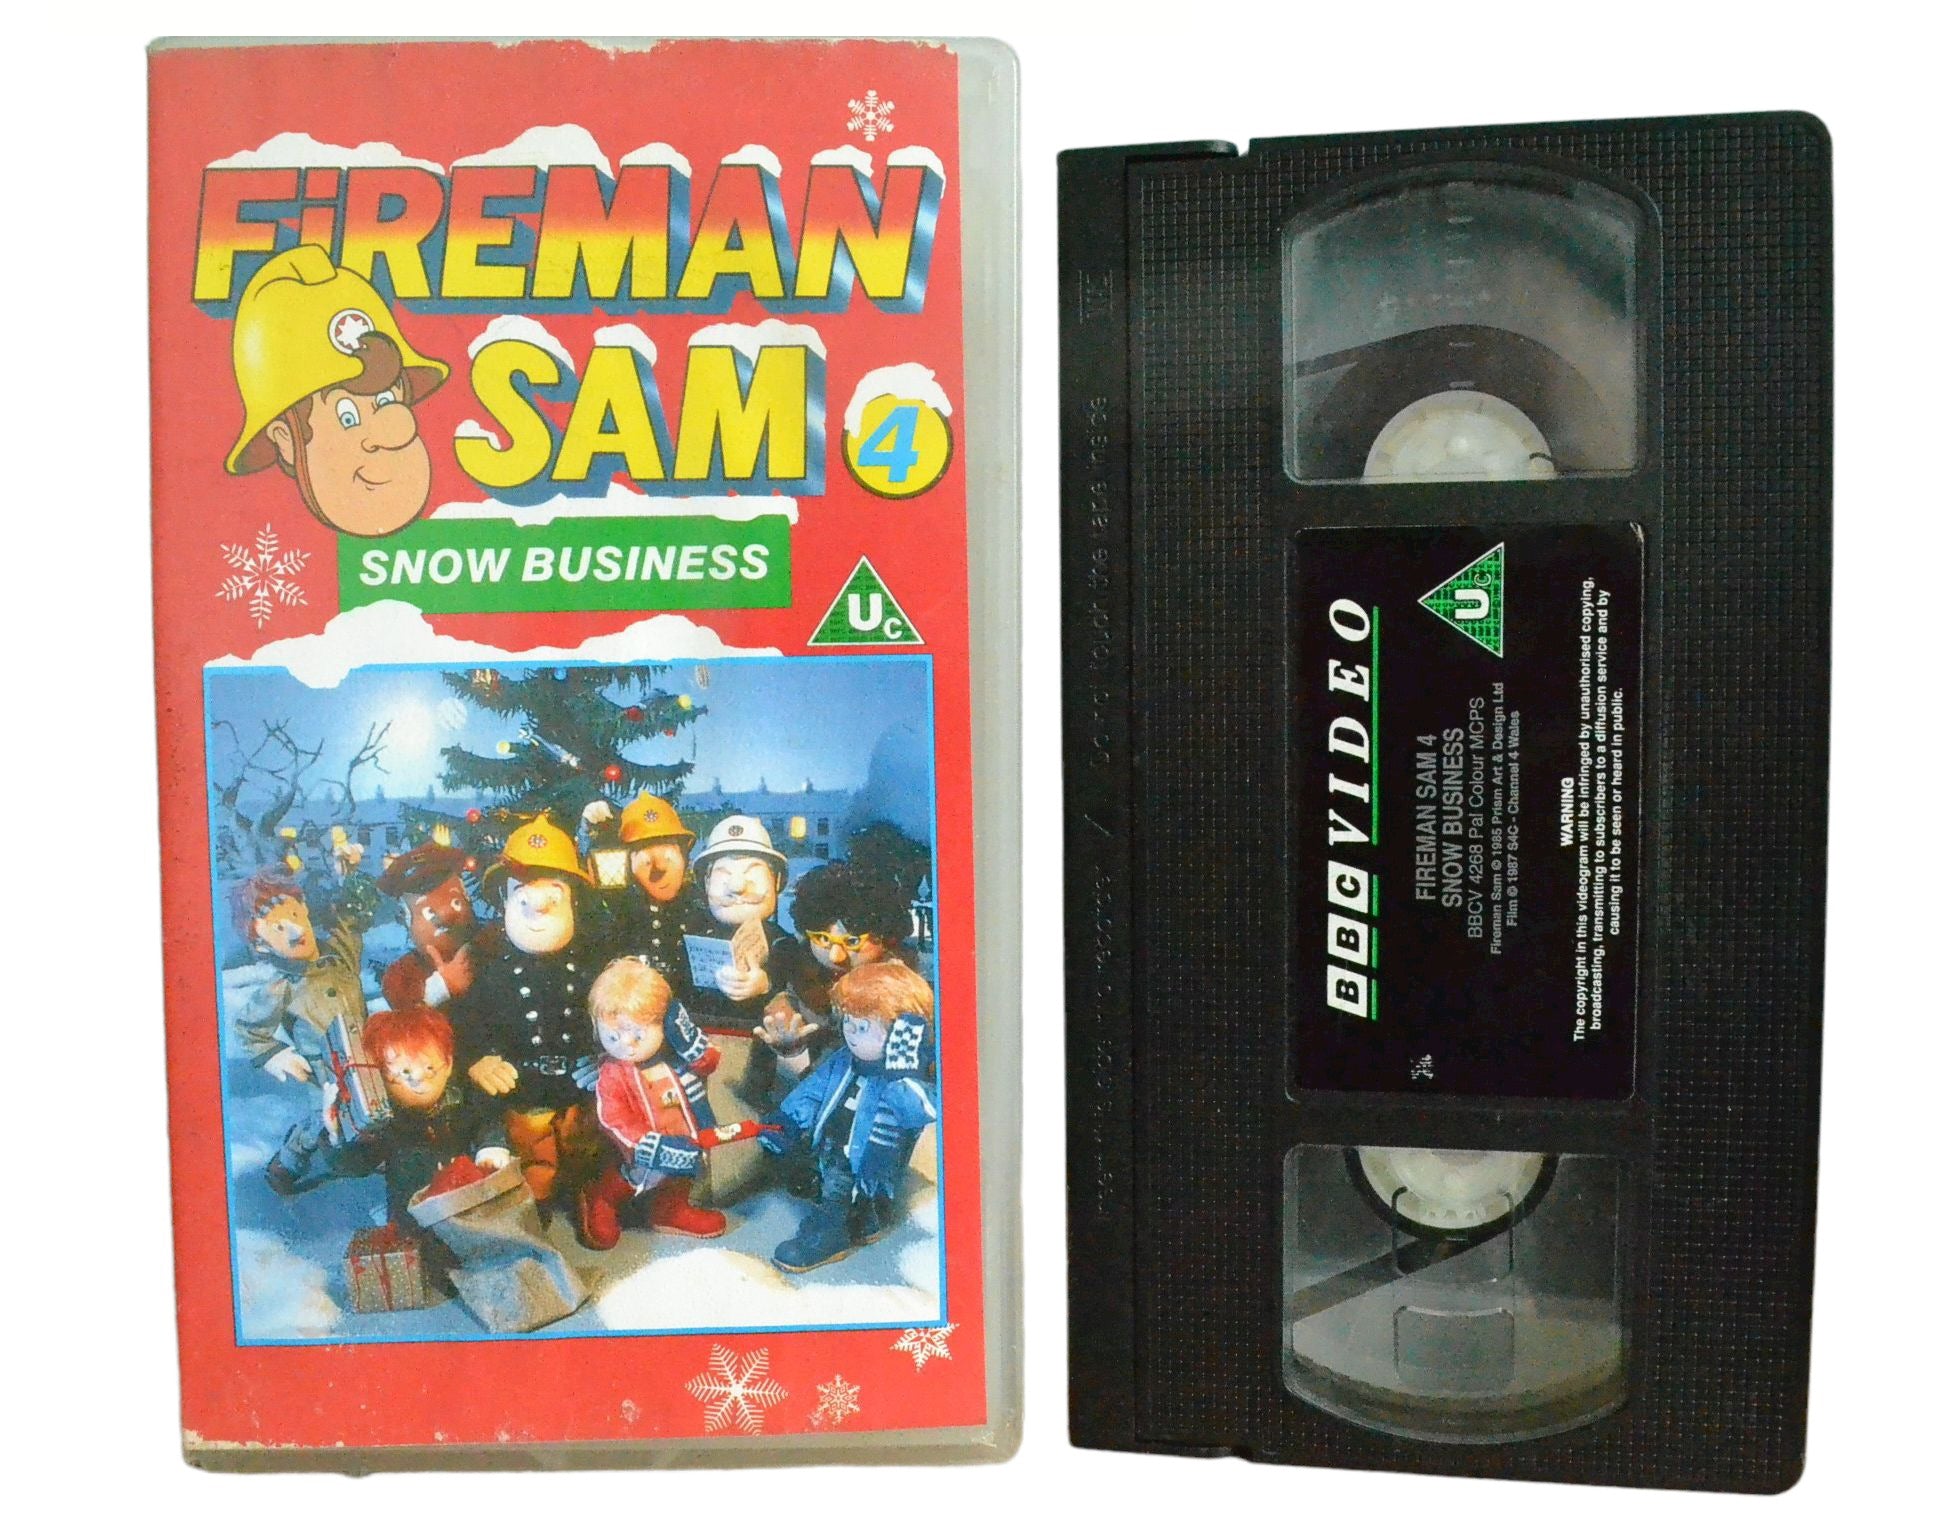 Fireman Sam 4 Snow Business - BBC Video - Carton Box - Pal VHS-